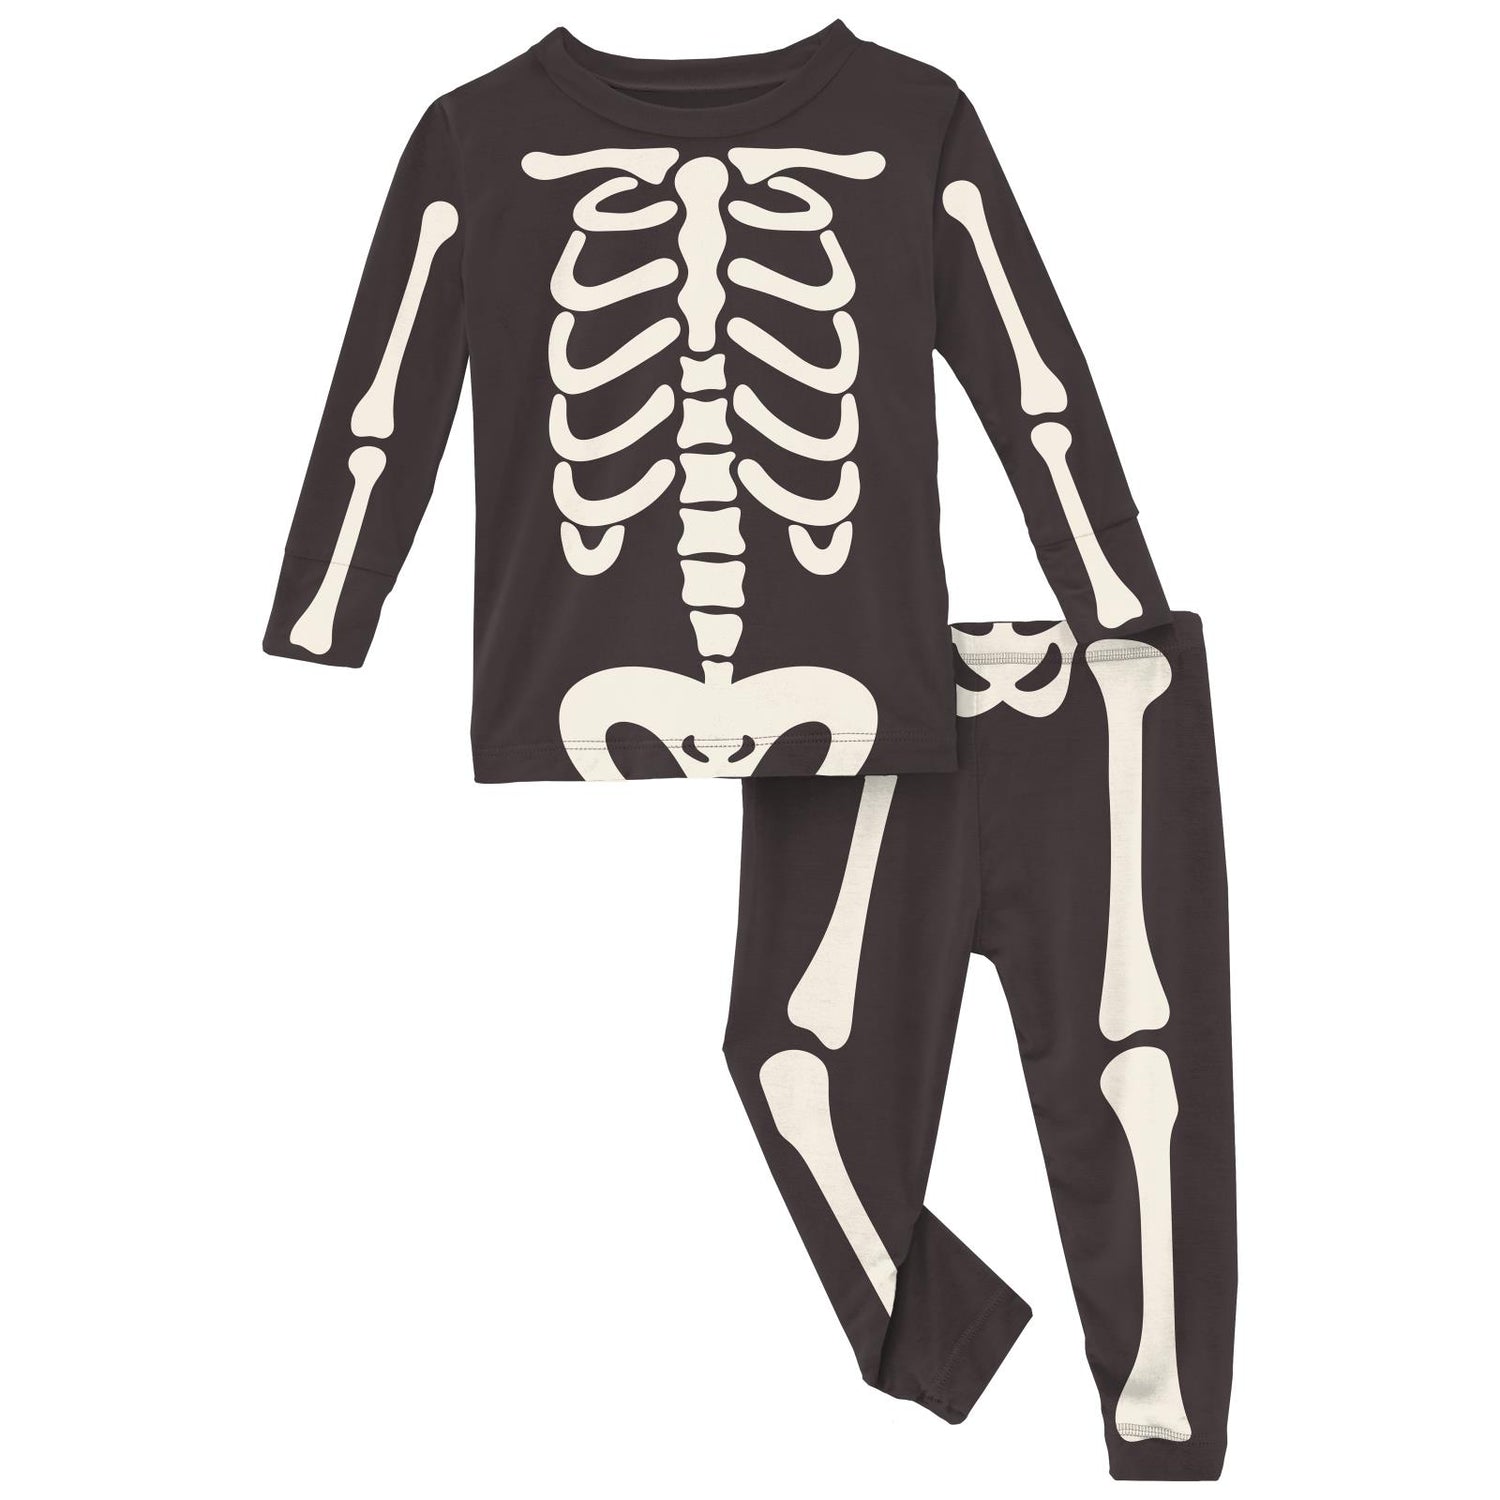 Long Sleeve Full Graphic Pajama Set in Skeleton